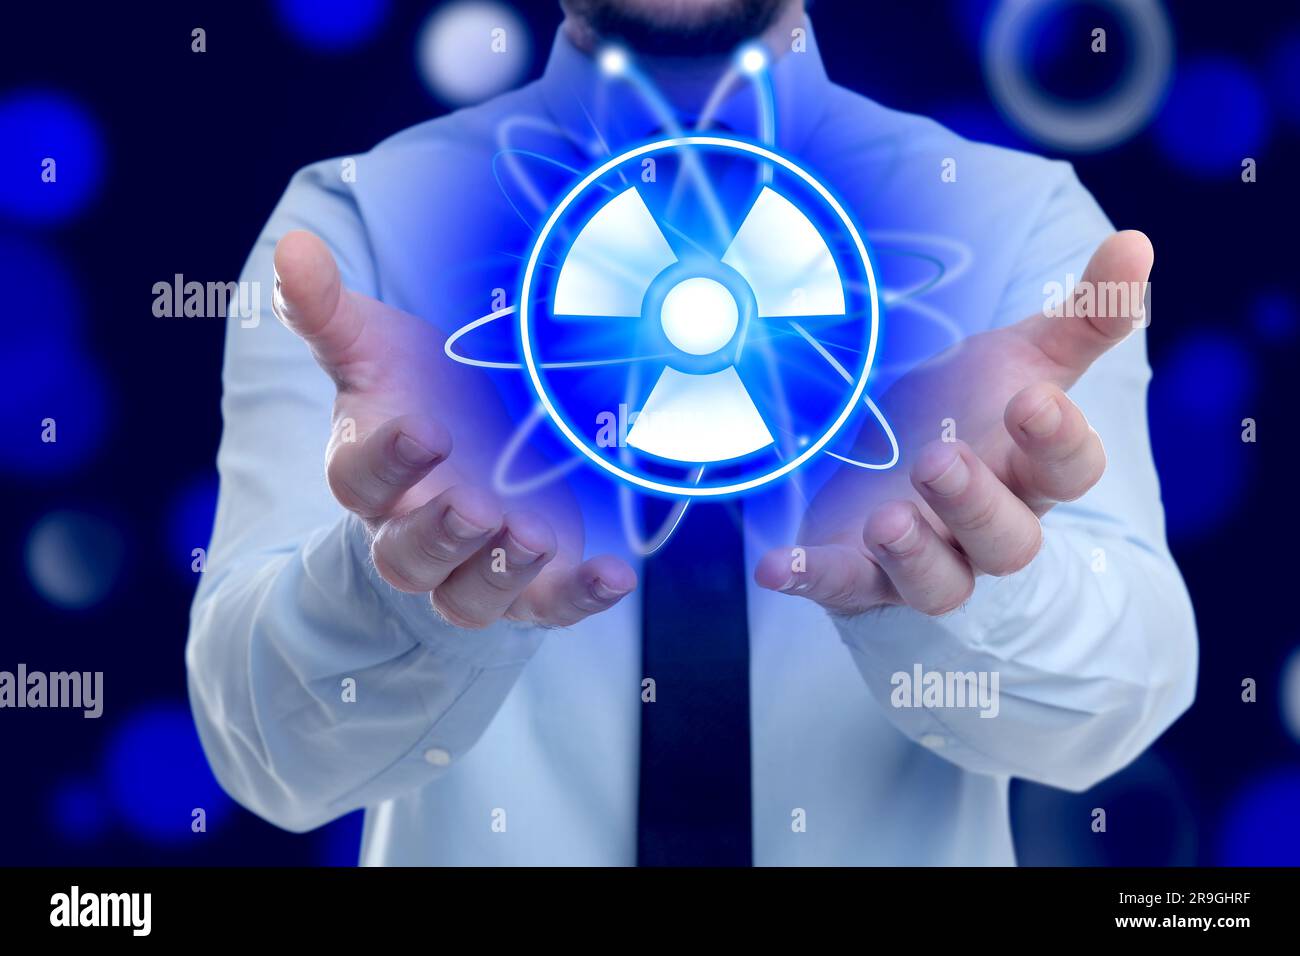 Man holding atom symbol with radiation warning sign on dark blue background, closeup. Bokeh effect Stock Photo